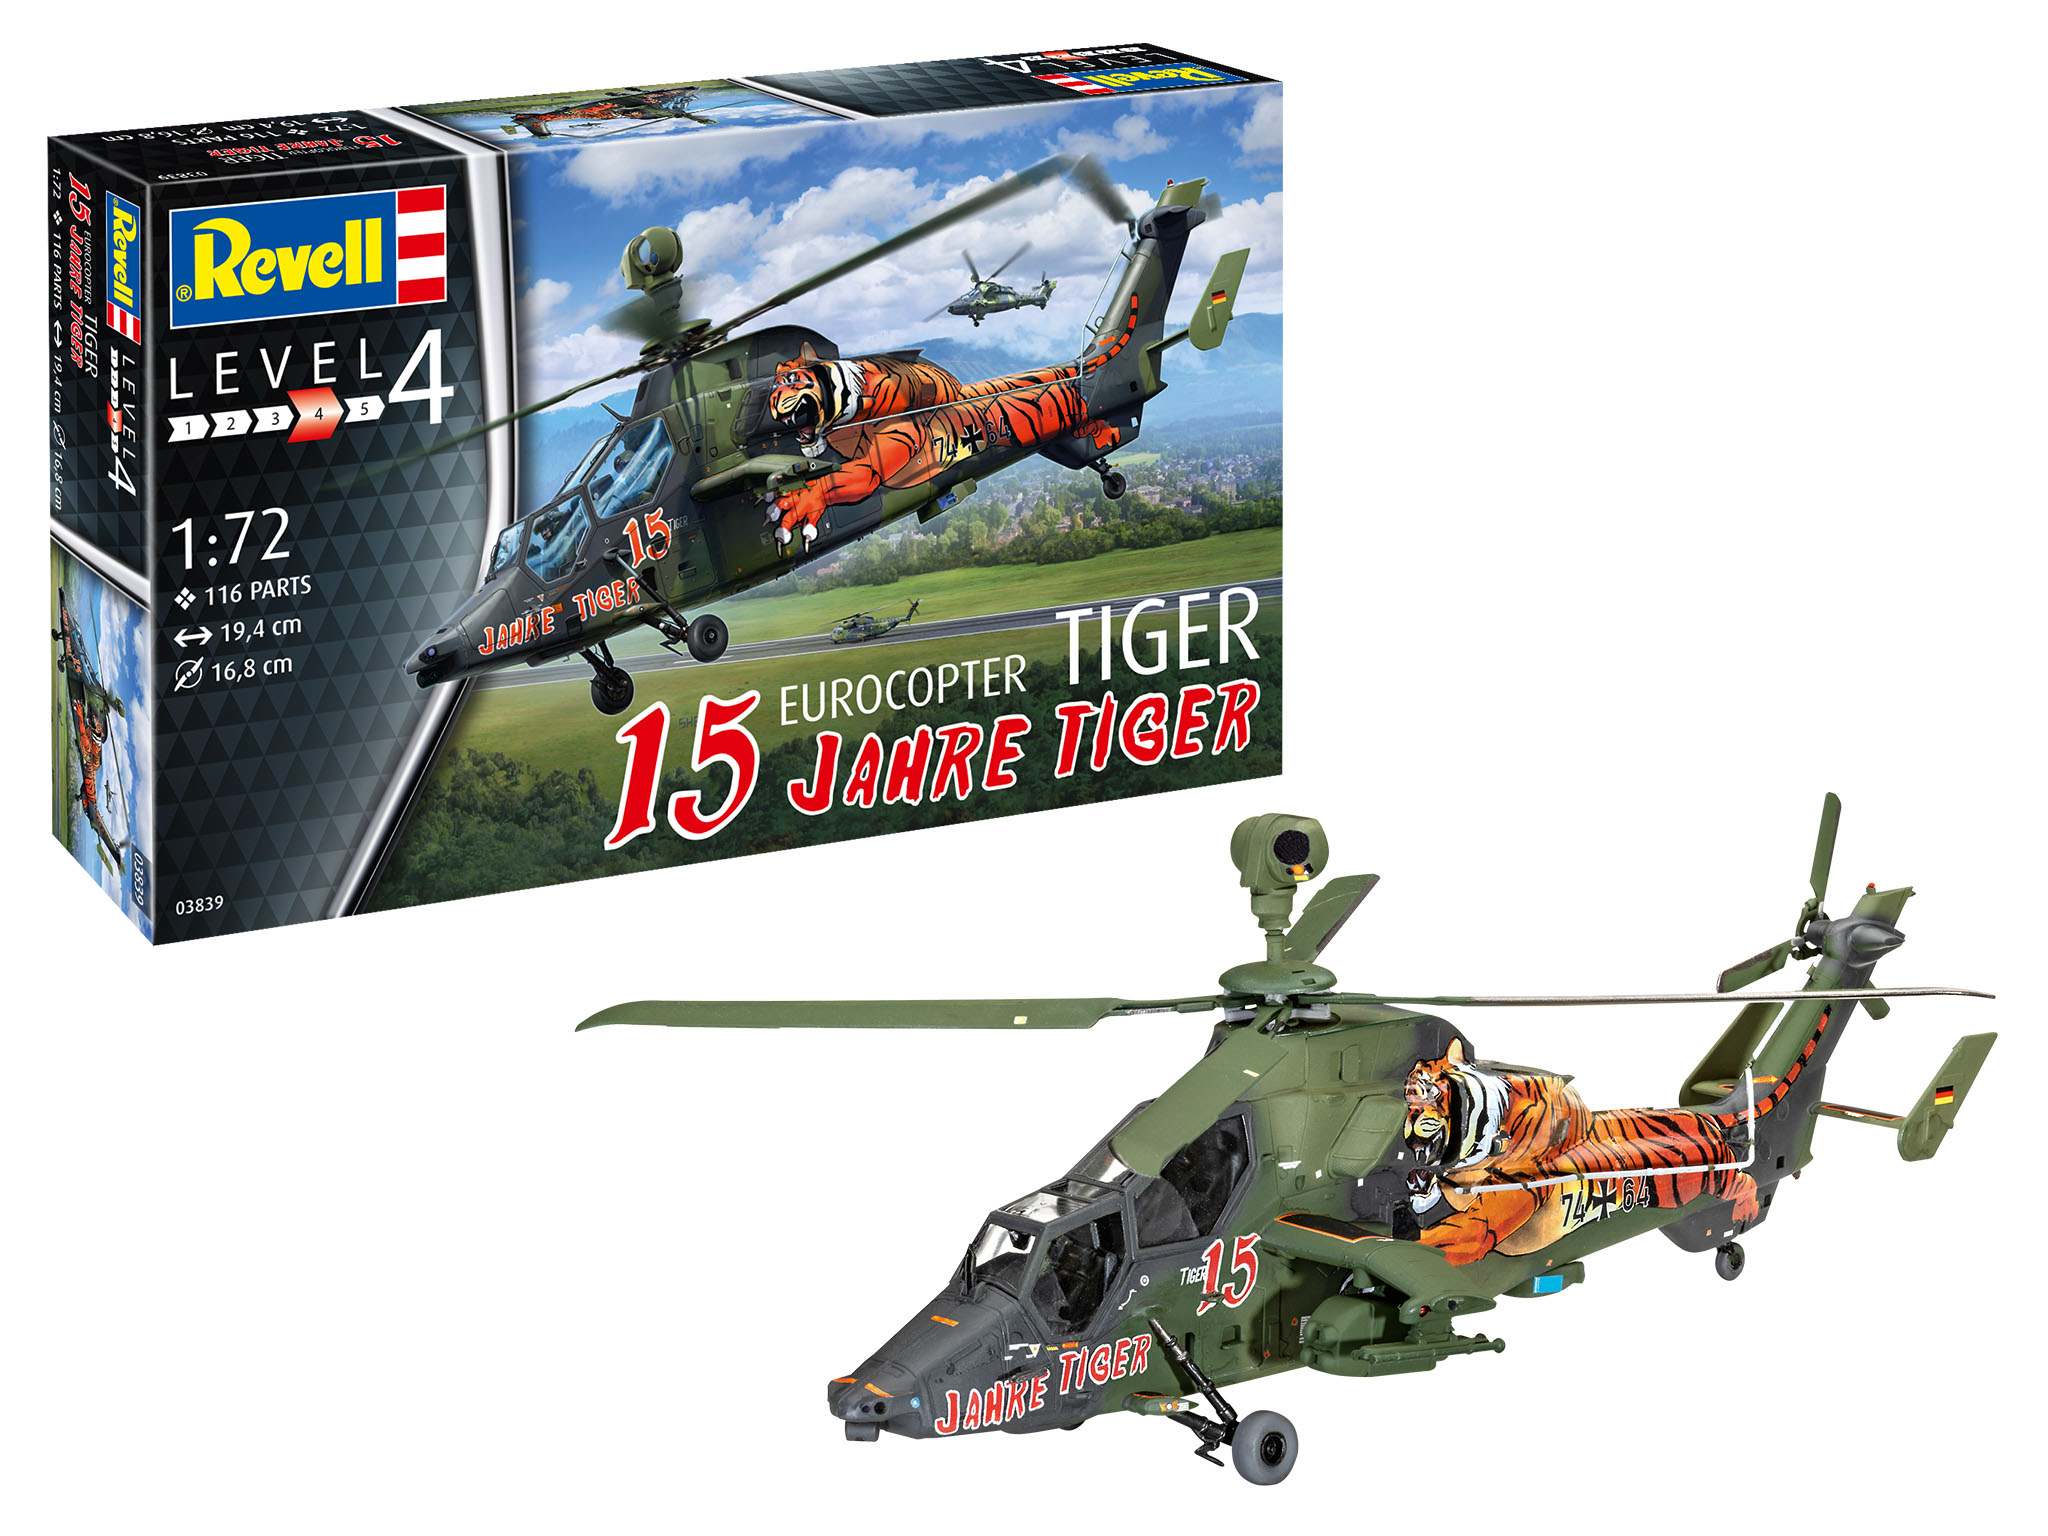 revell-03839-Eurocopter-Tiger-15-Jahre-Tiger-Jubiläumslackierung